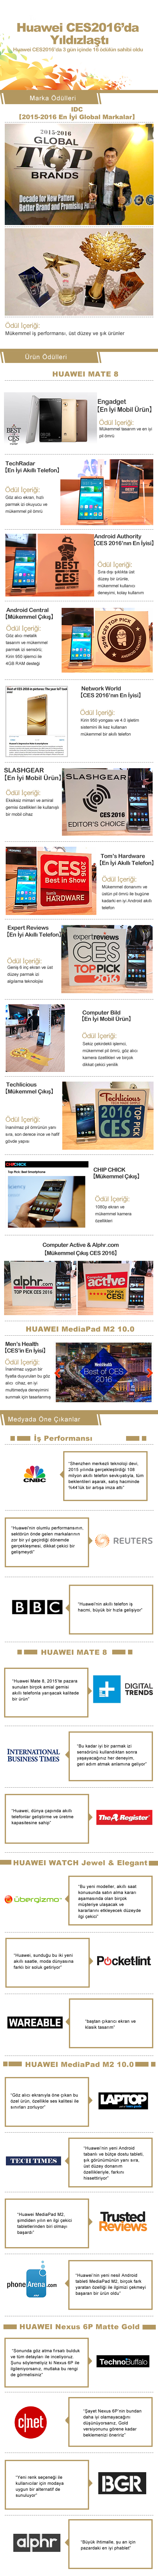 Huawei_CES_ödül